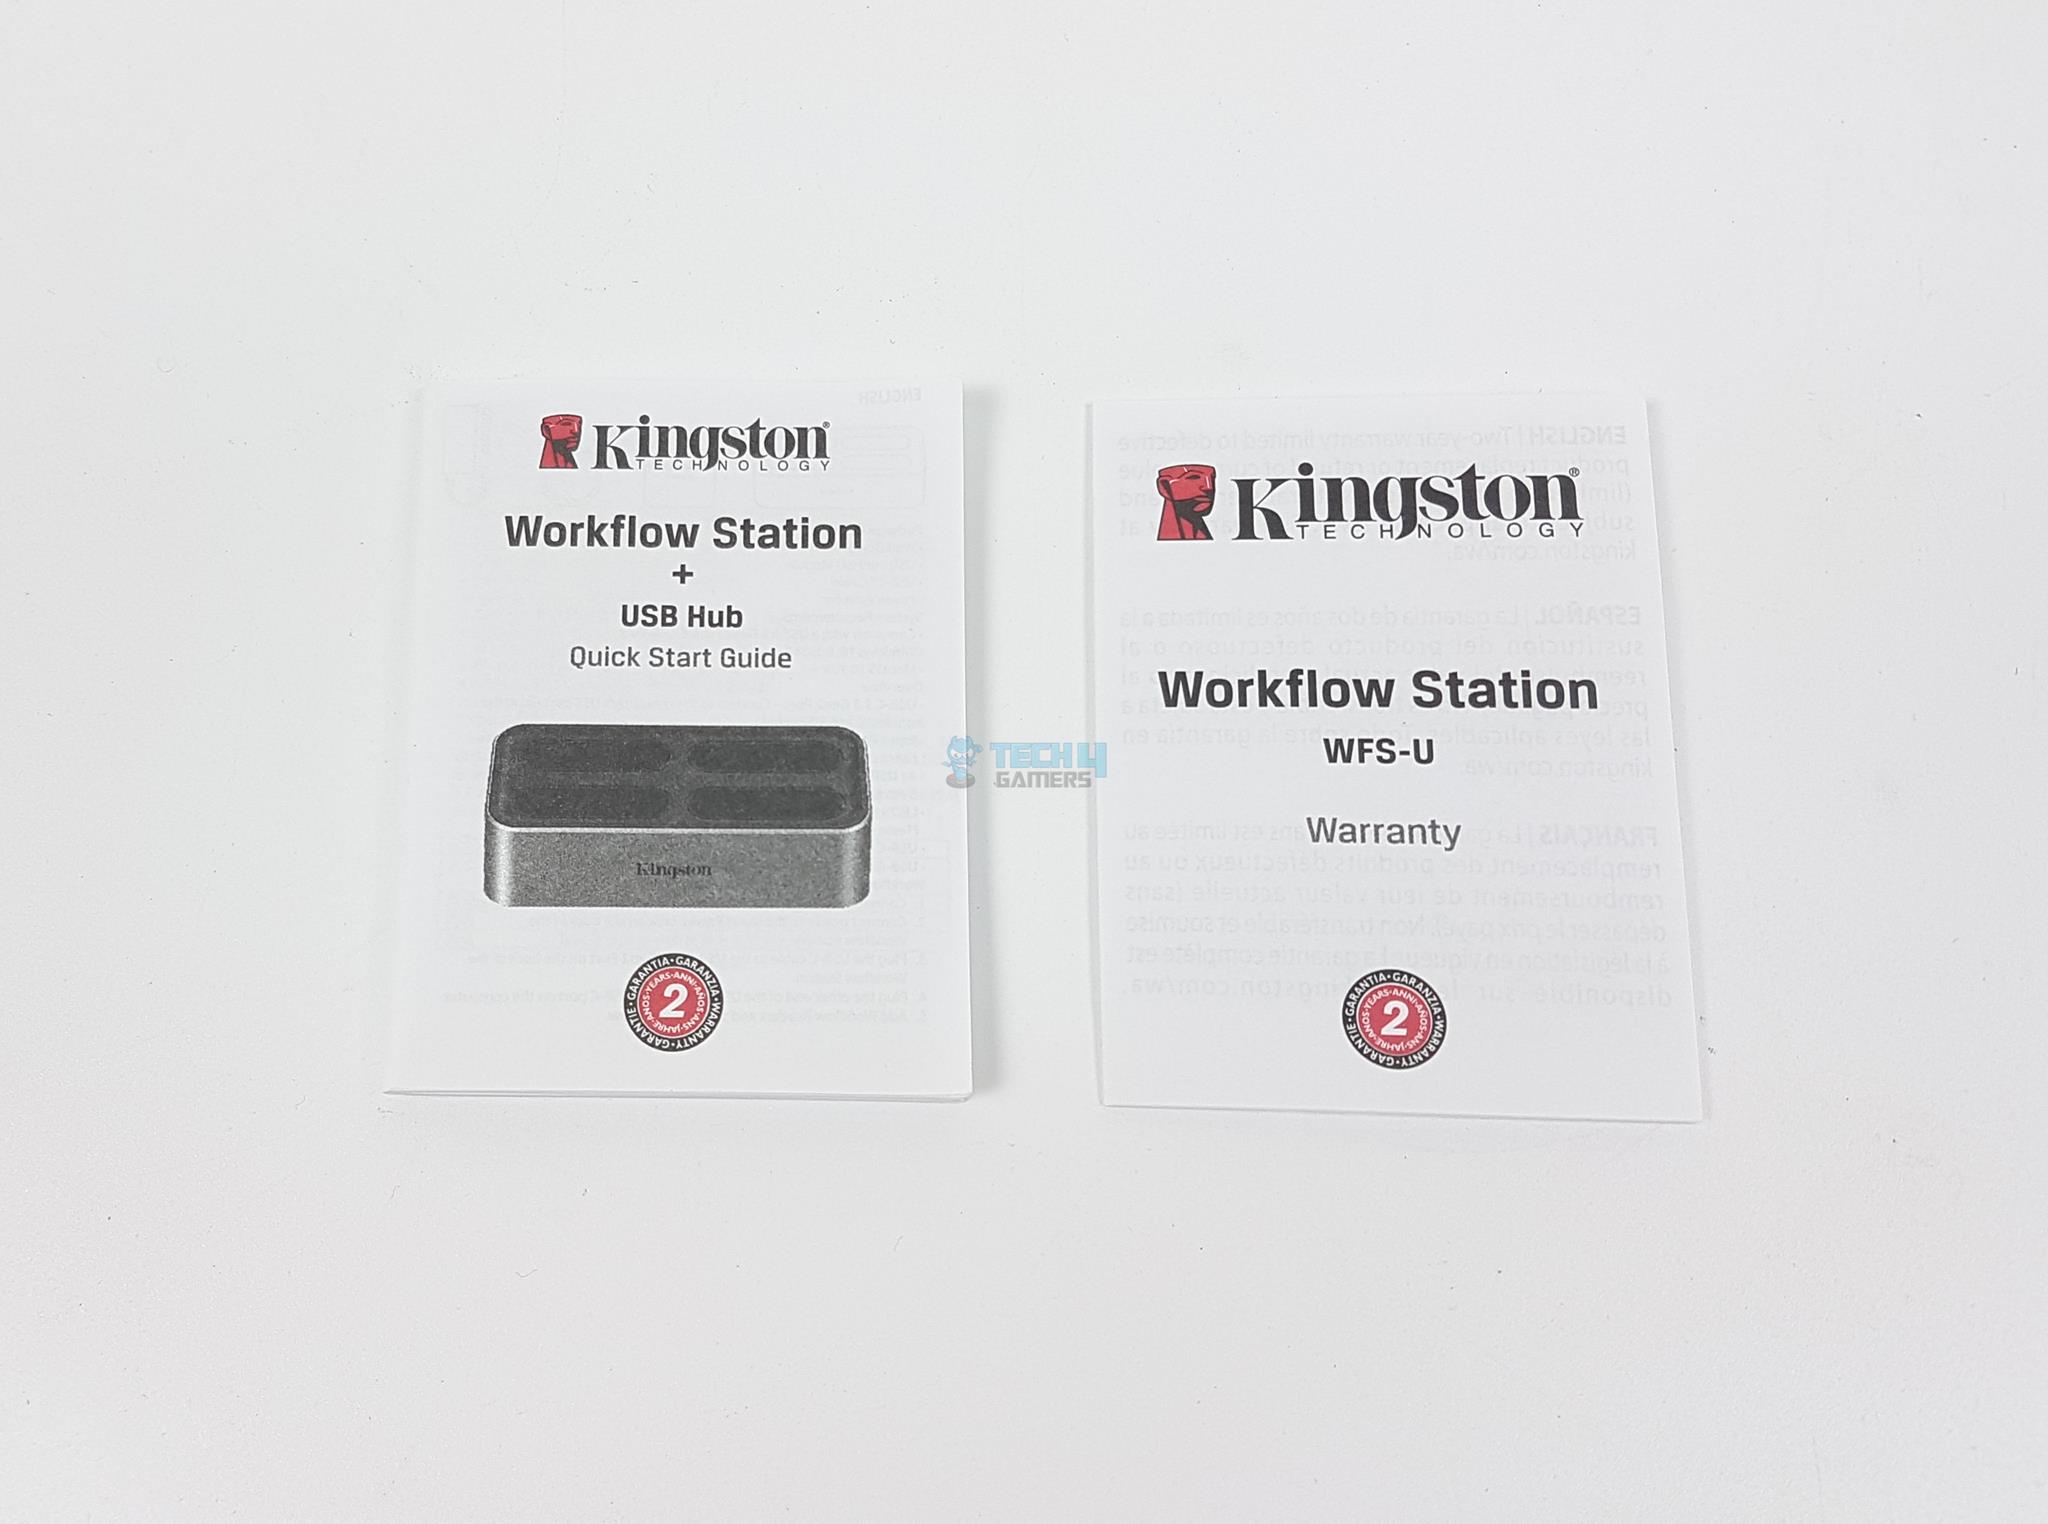 Kingston Workflow Station — Documents